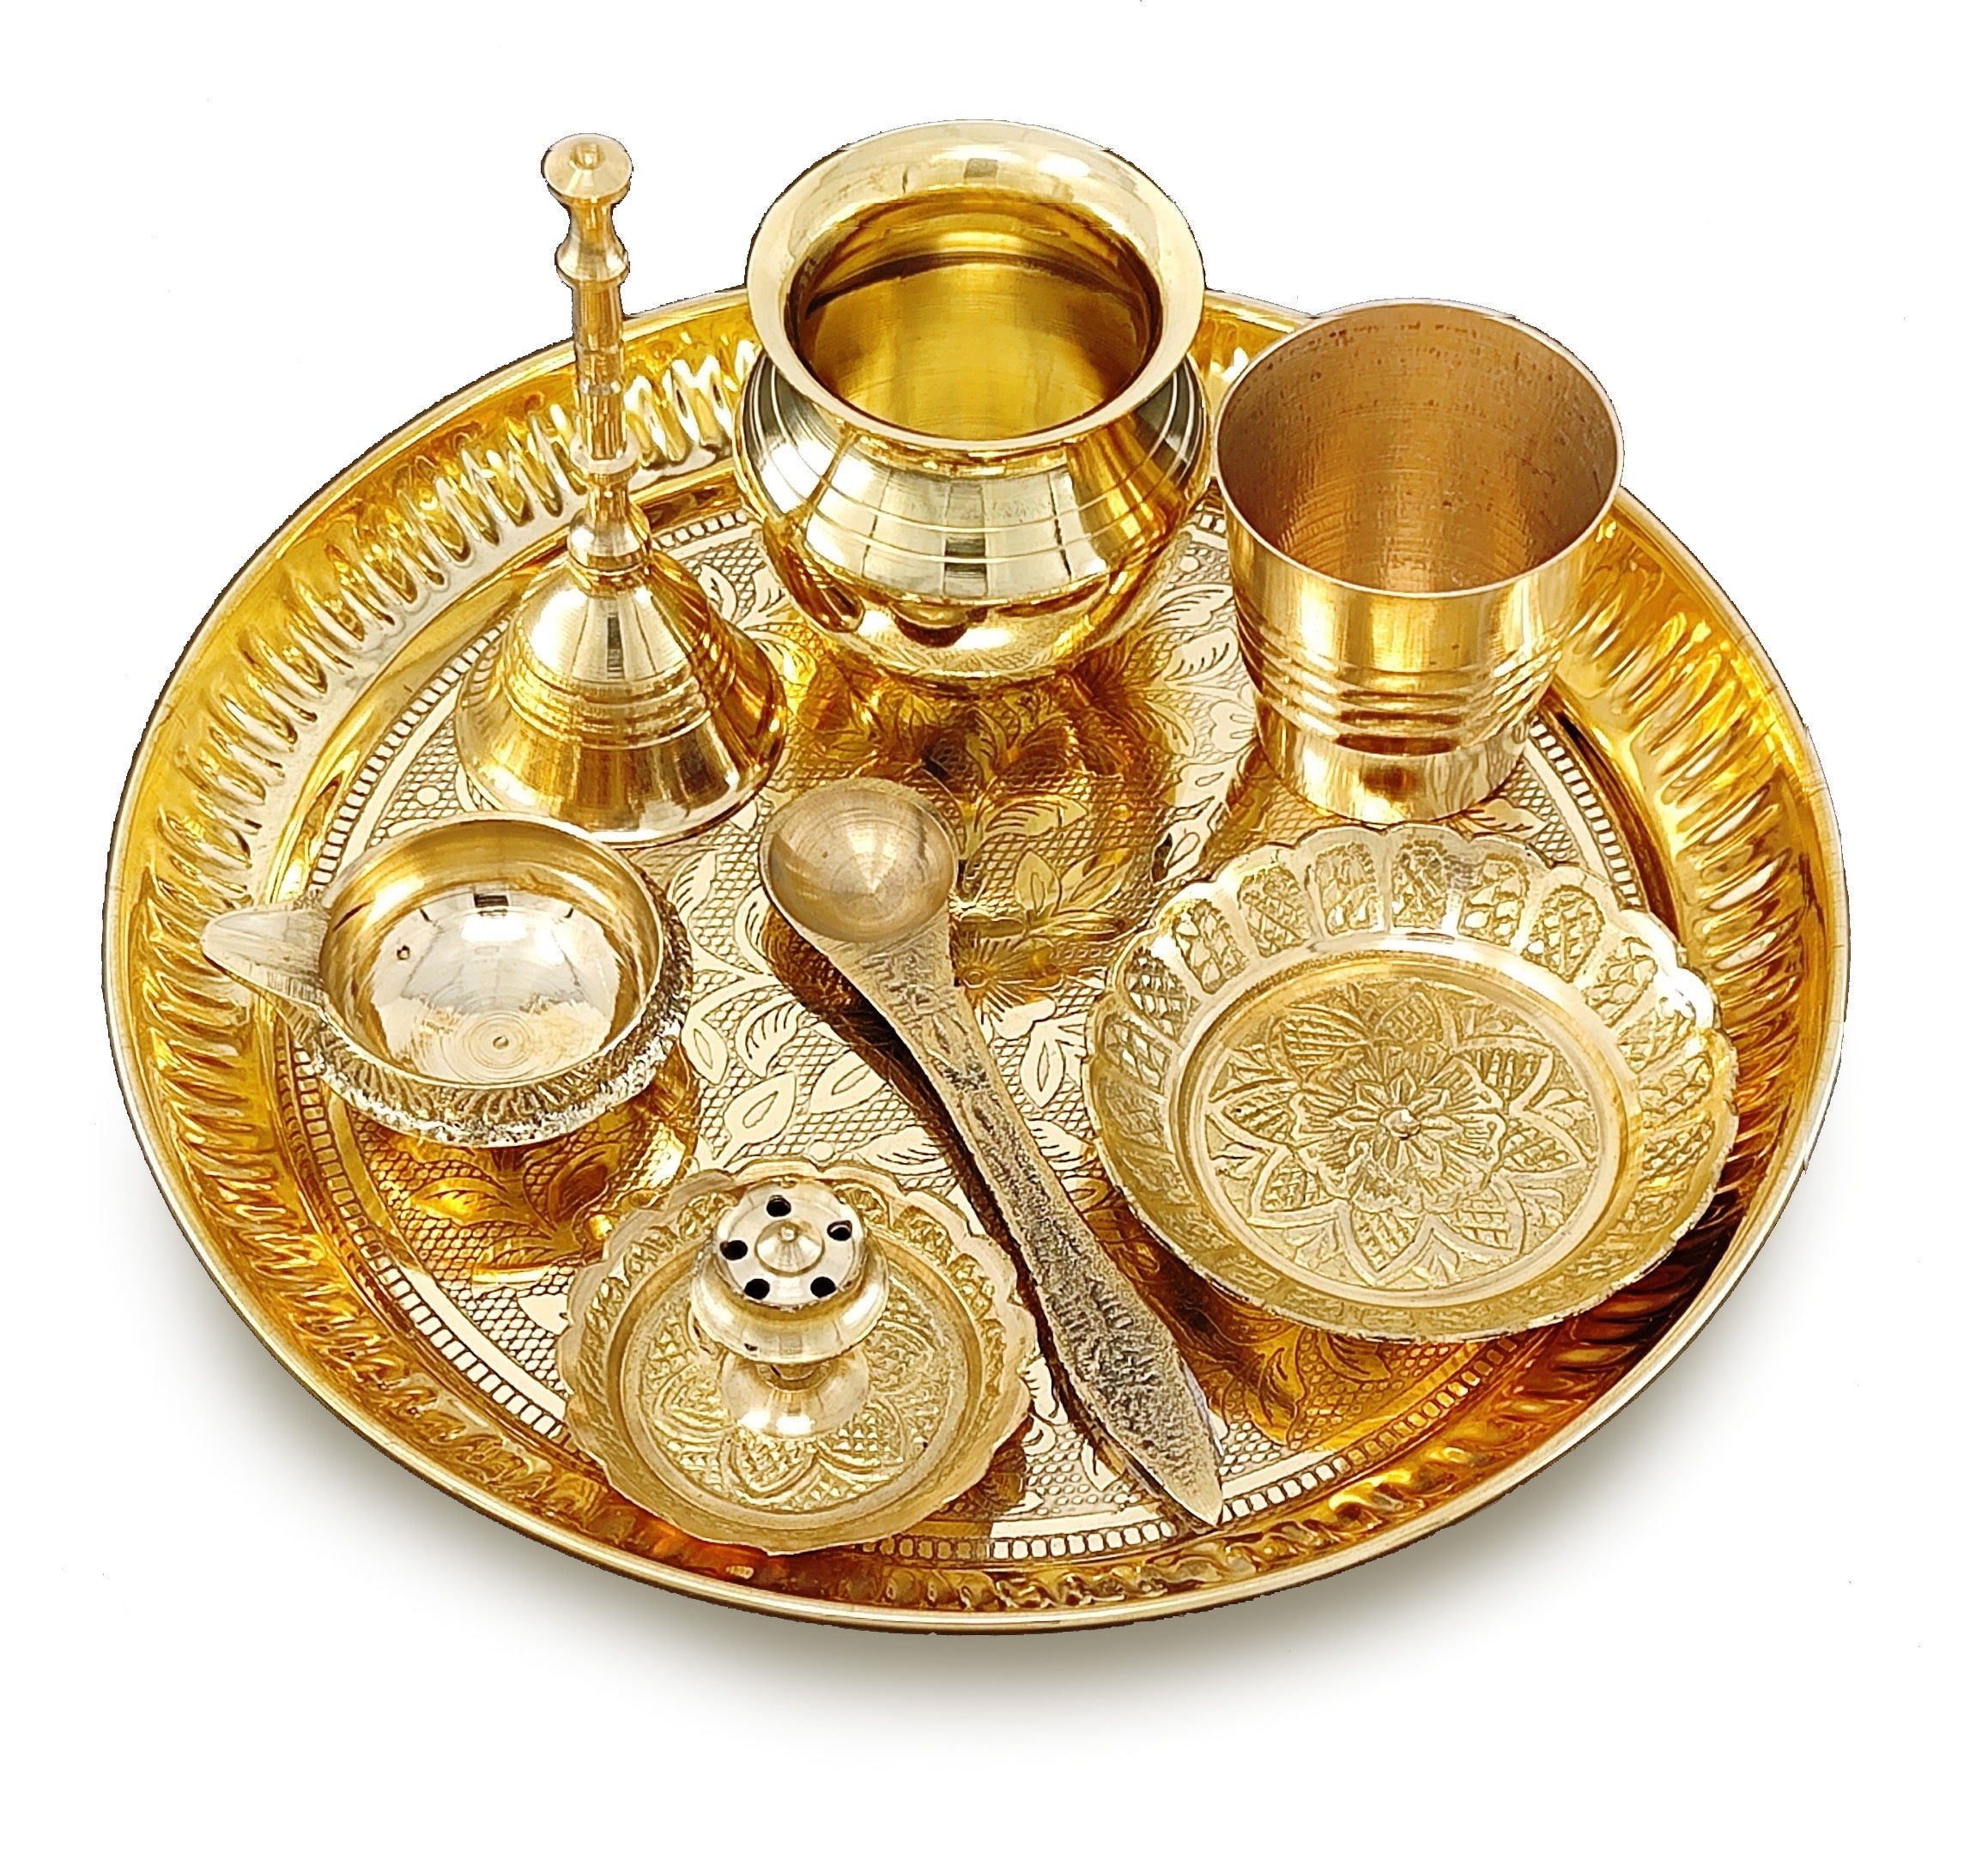 BENGALEN Brass Pooja Thali Set 7 Inch with Pital Puja Plate Kalash Bowl Spoon Dhup Dan Palli Ghanti Kuber Diya Chandan Wati Arti Thali for Diwali Home Office Mandir Wedding Return Gift Items